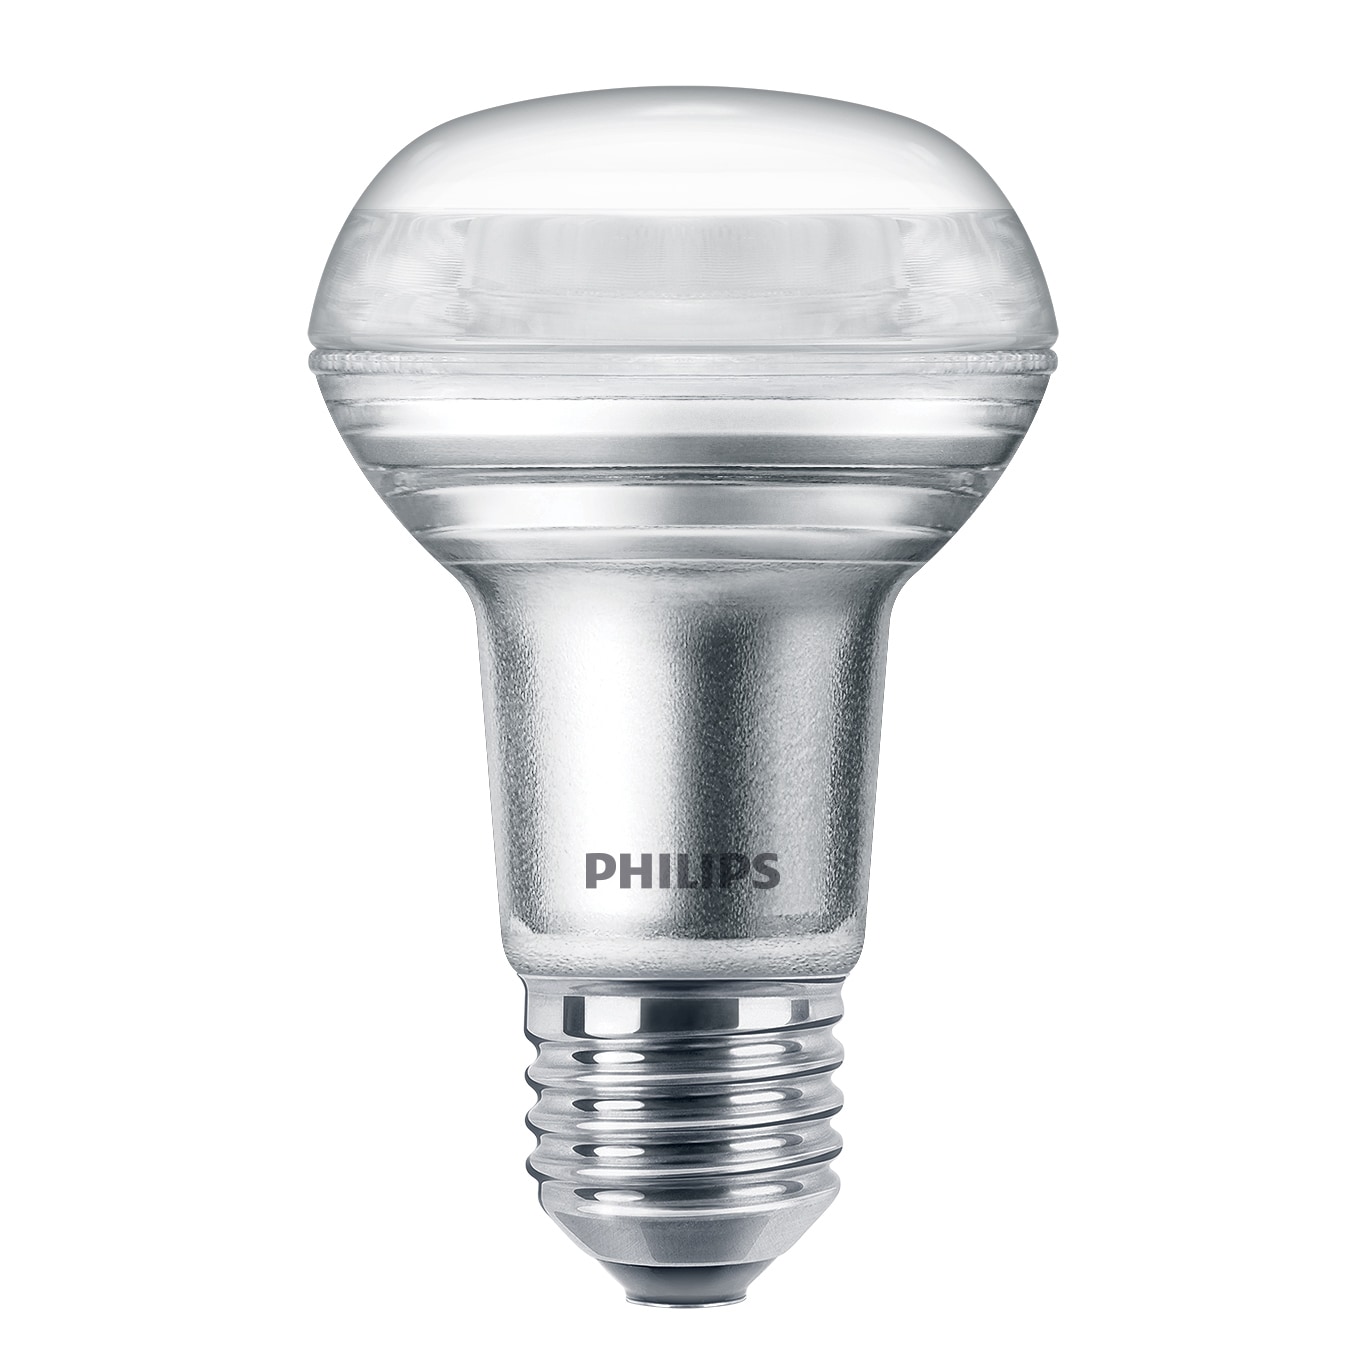 7: Philips Classic LED elpære